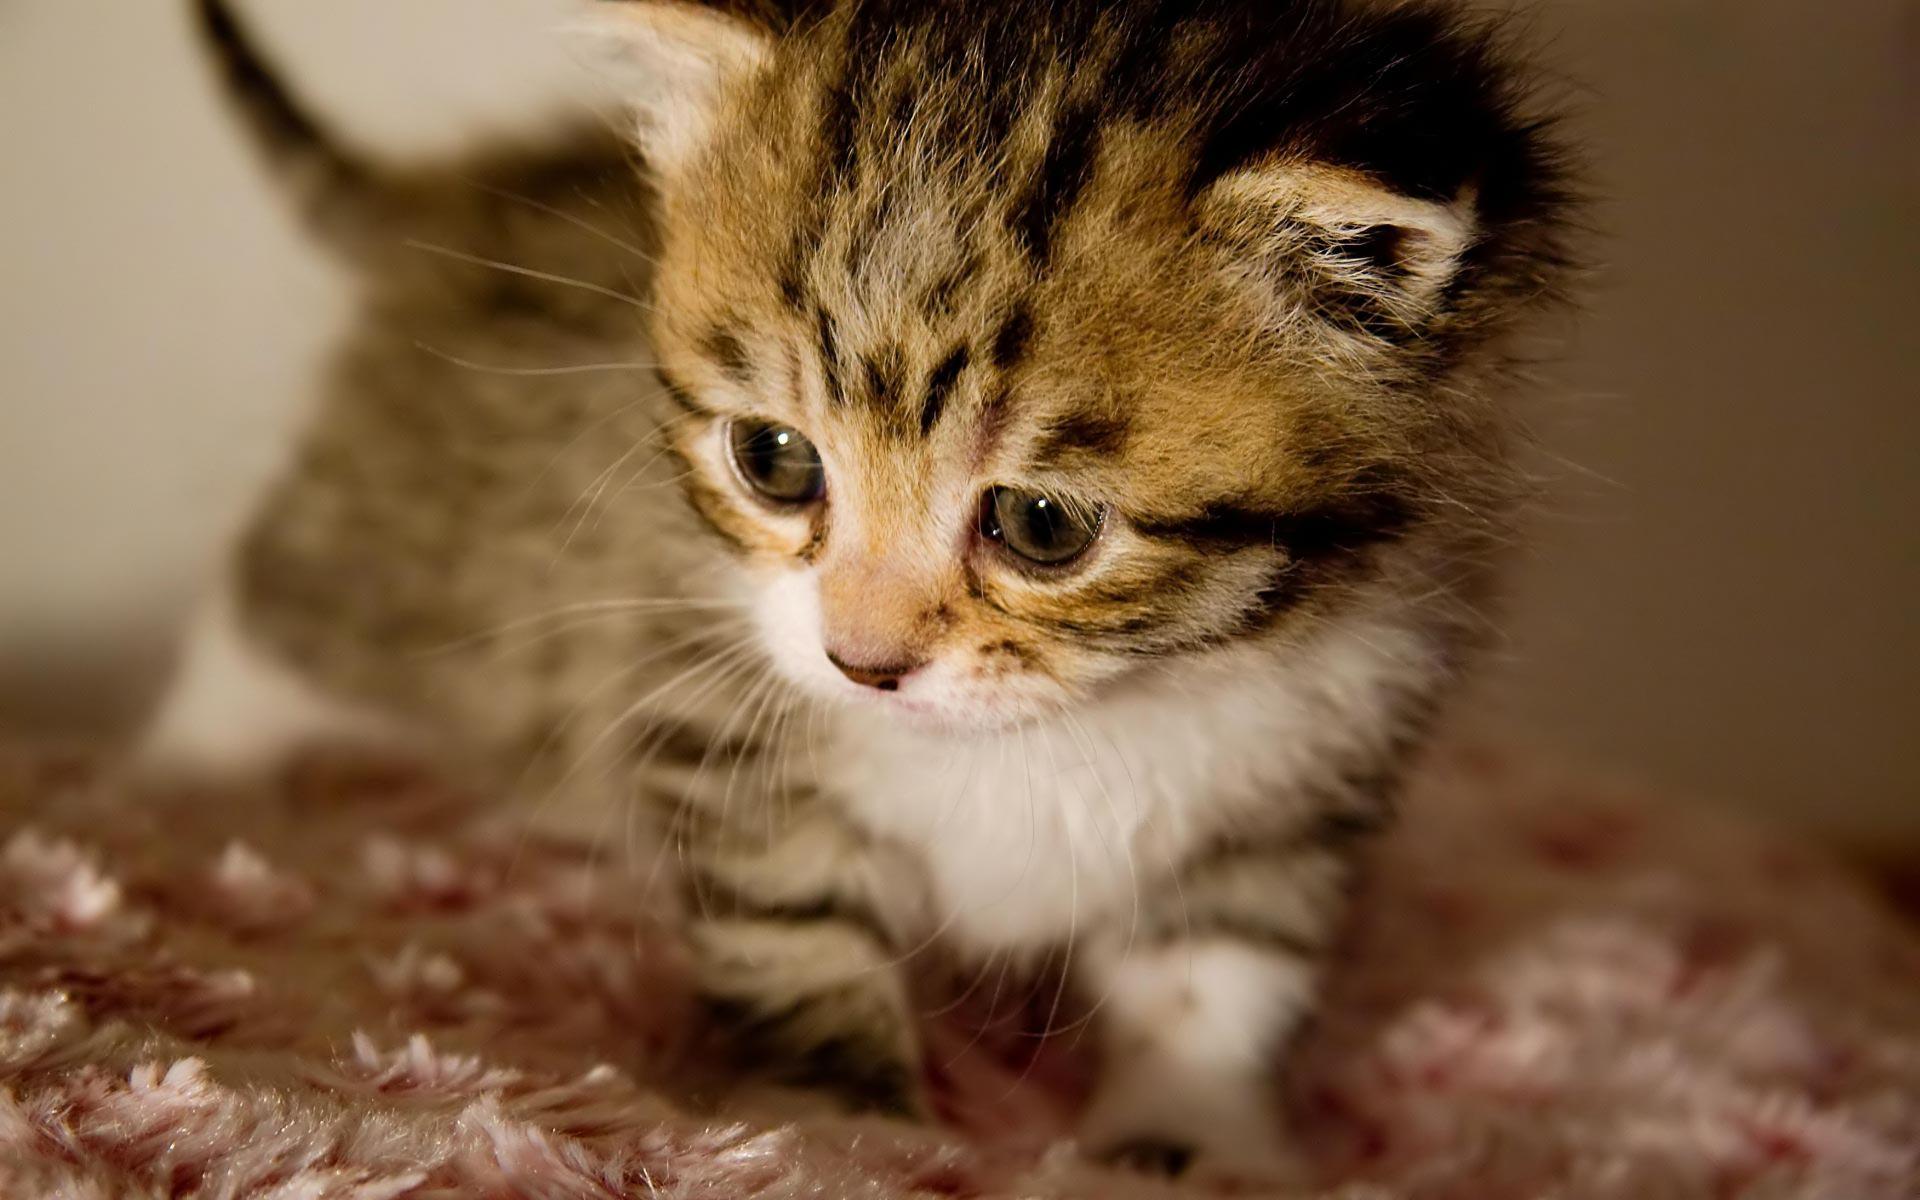 Cute Cheetoh kitten photo and wallpaper. Beautiful Cute Cheetoh